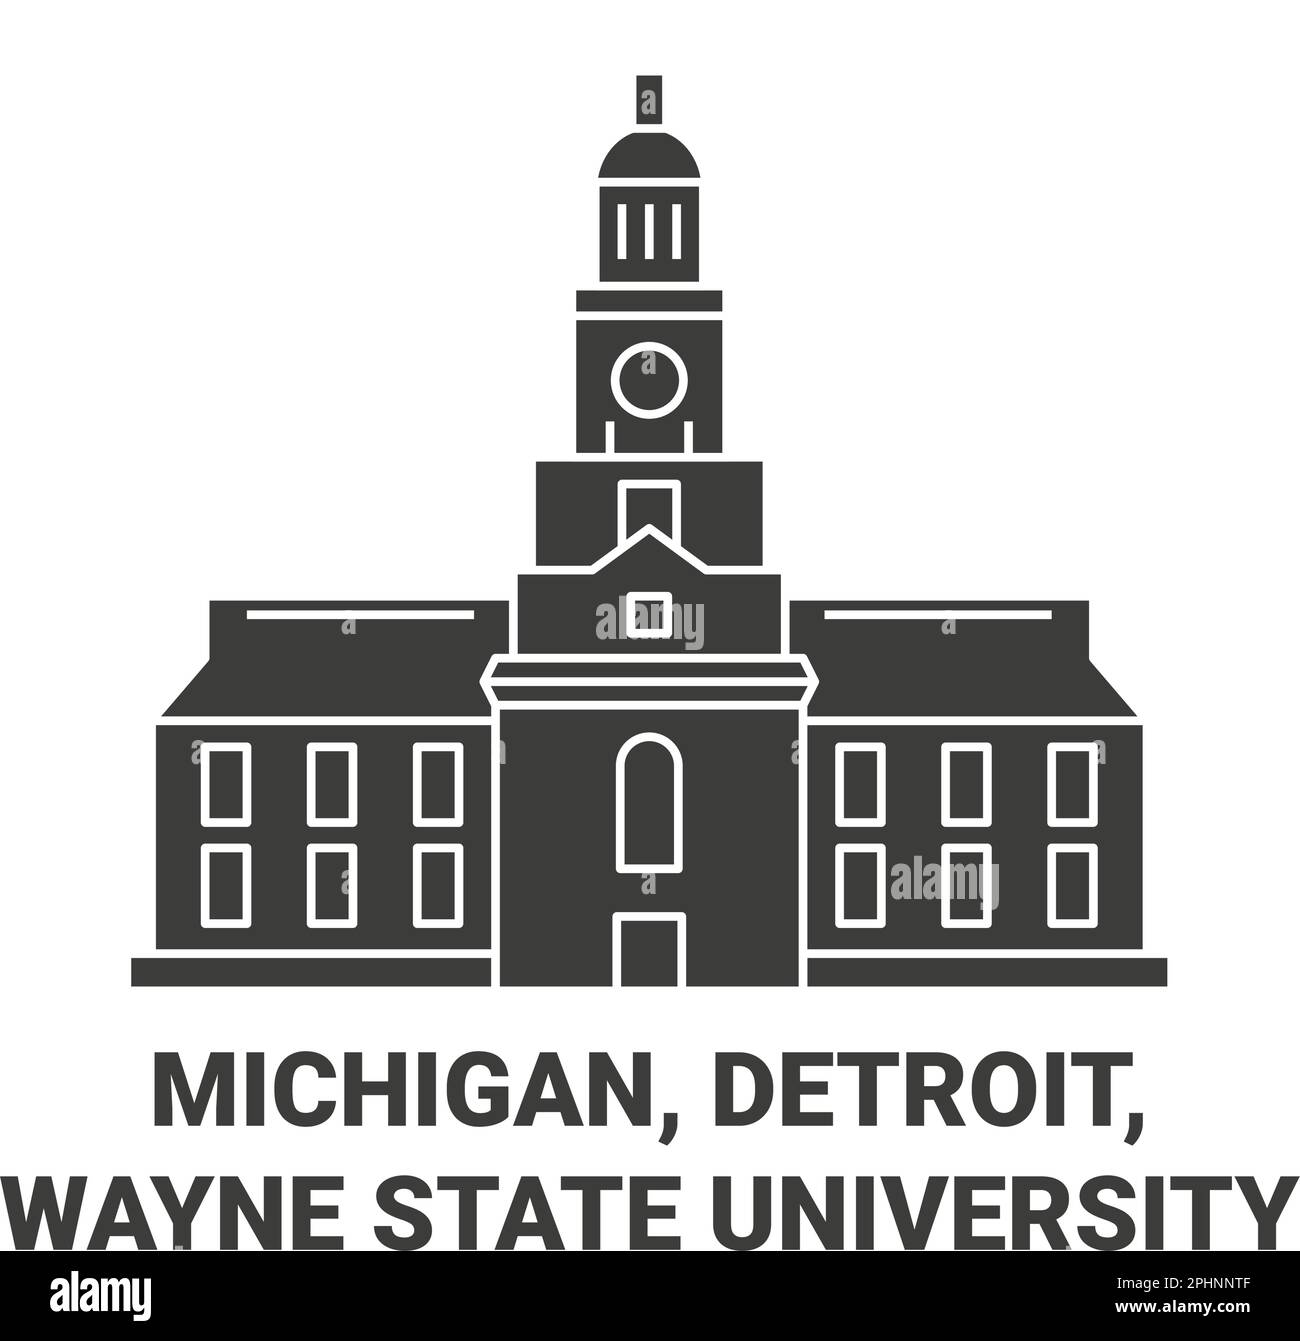 United States, Michigan, Detroit, Wayne State University travel landmark vector illustration Stock Vector